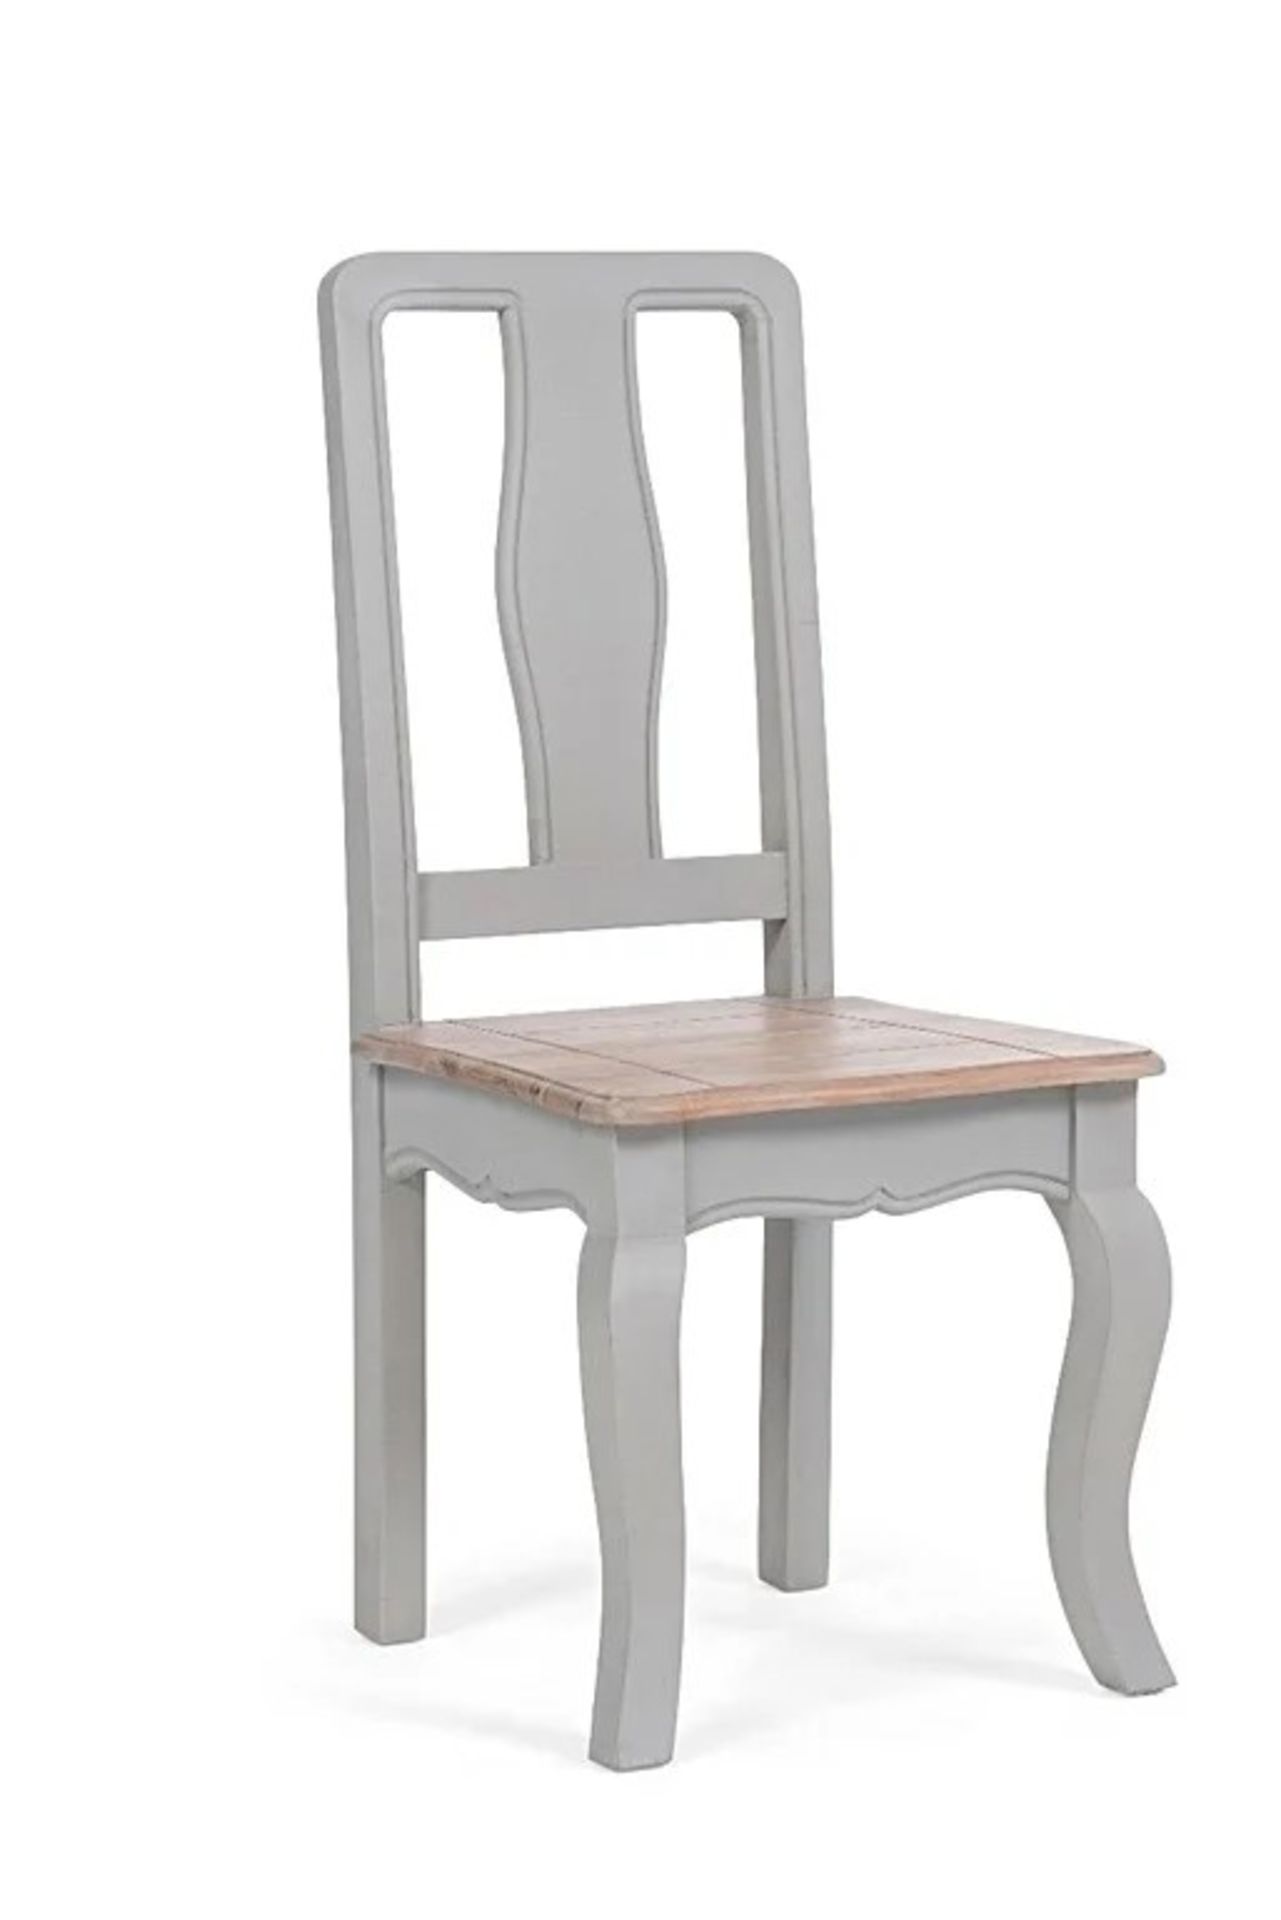 A set of 3 x Parisian White Oak Shabby Chic Dining Chair has decidedly feminine curves.